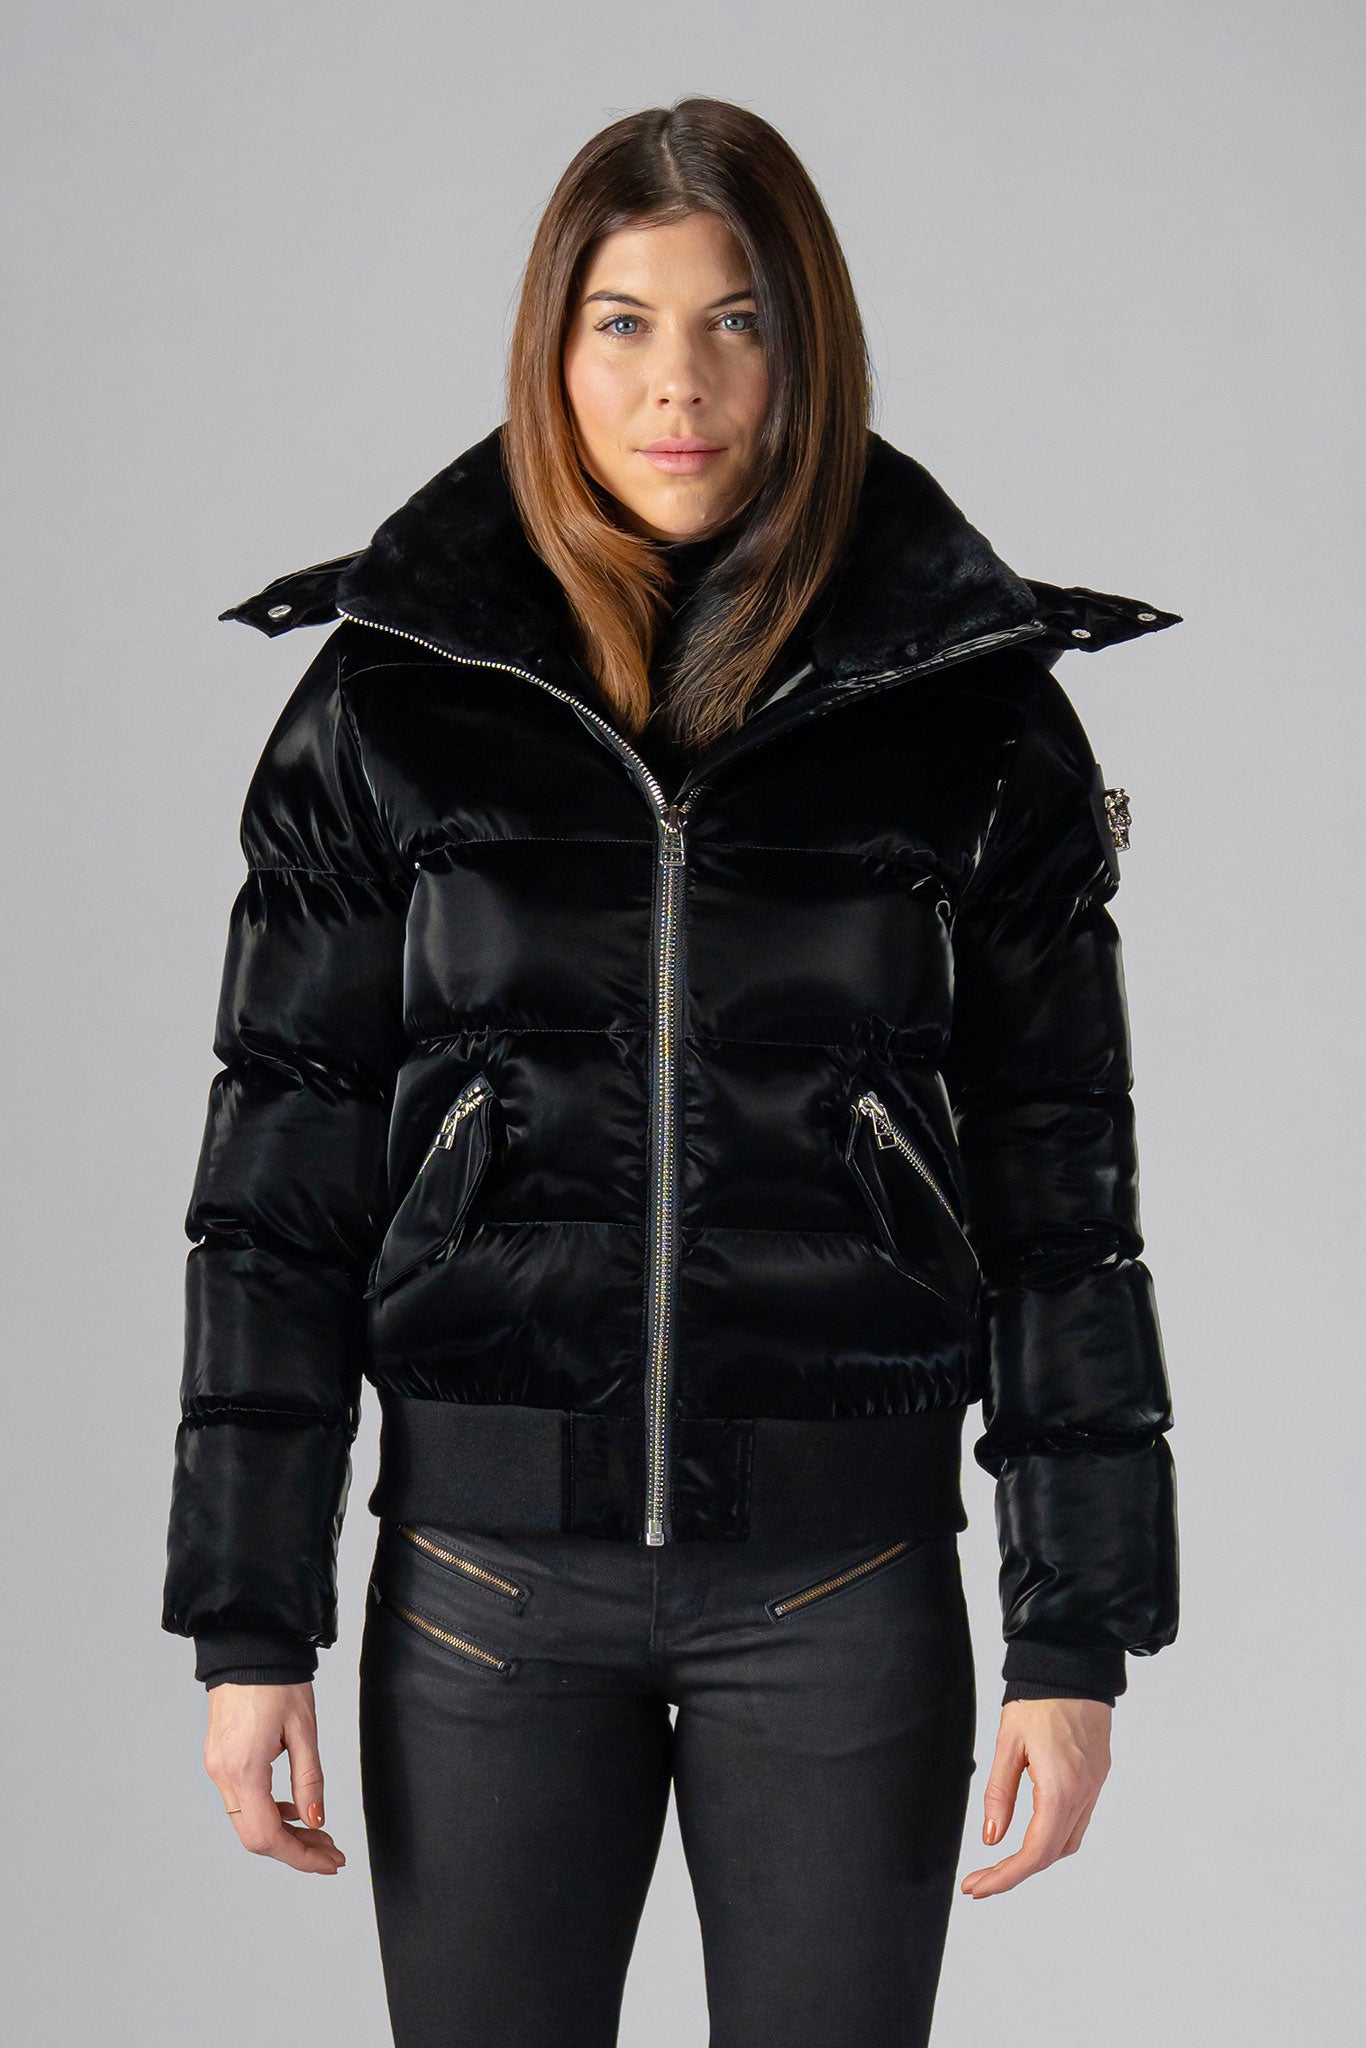 Woodpecker Women's Woody Bomber Winter coat. High-end Canadian designer winter coat for women in shiny “All Wet Black